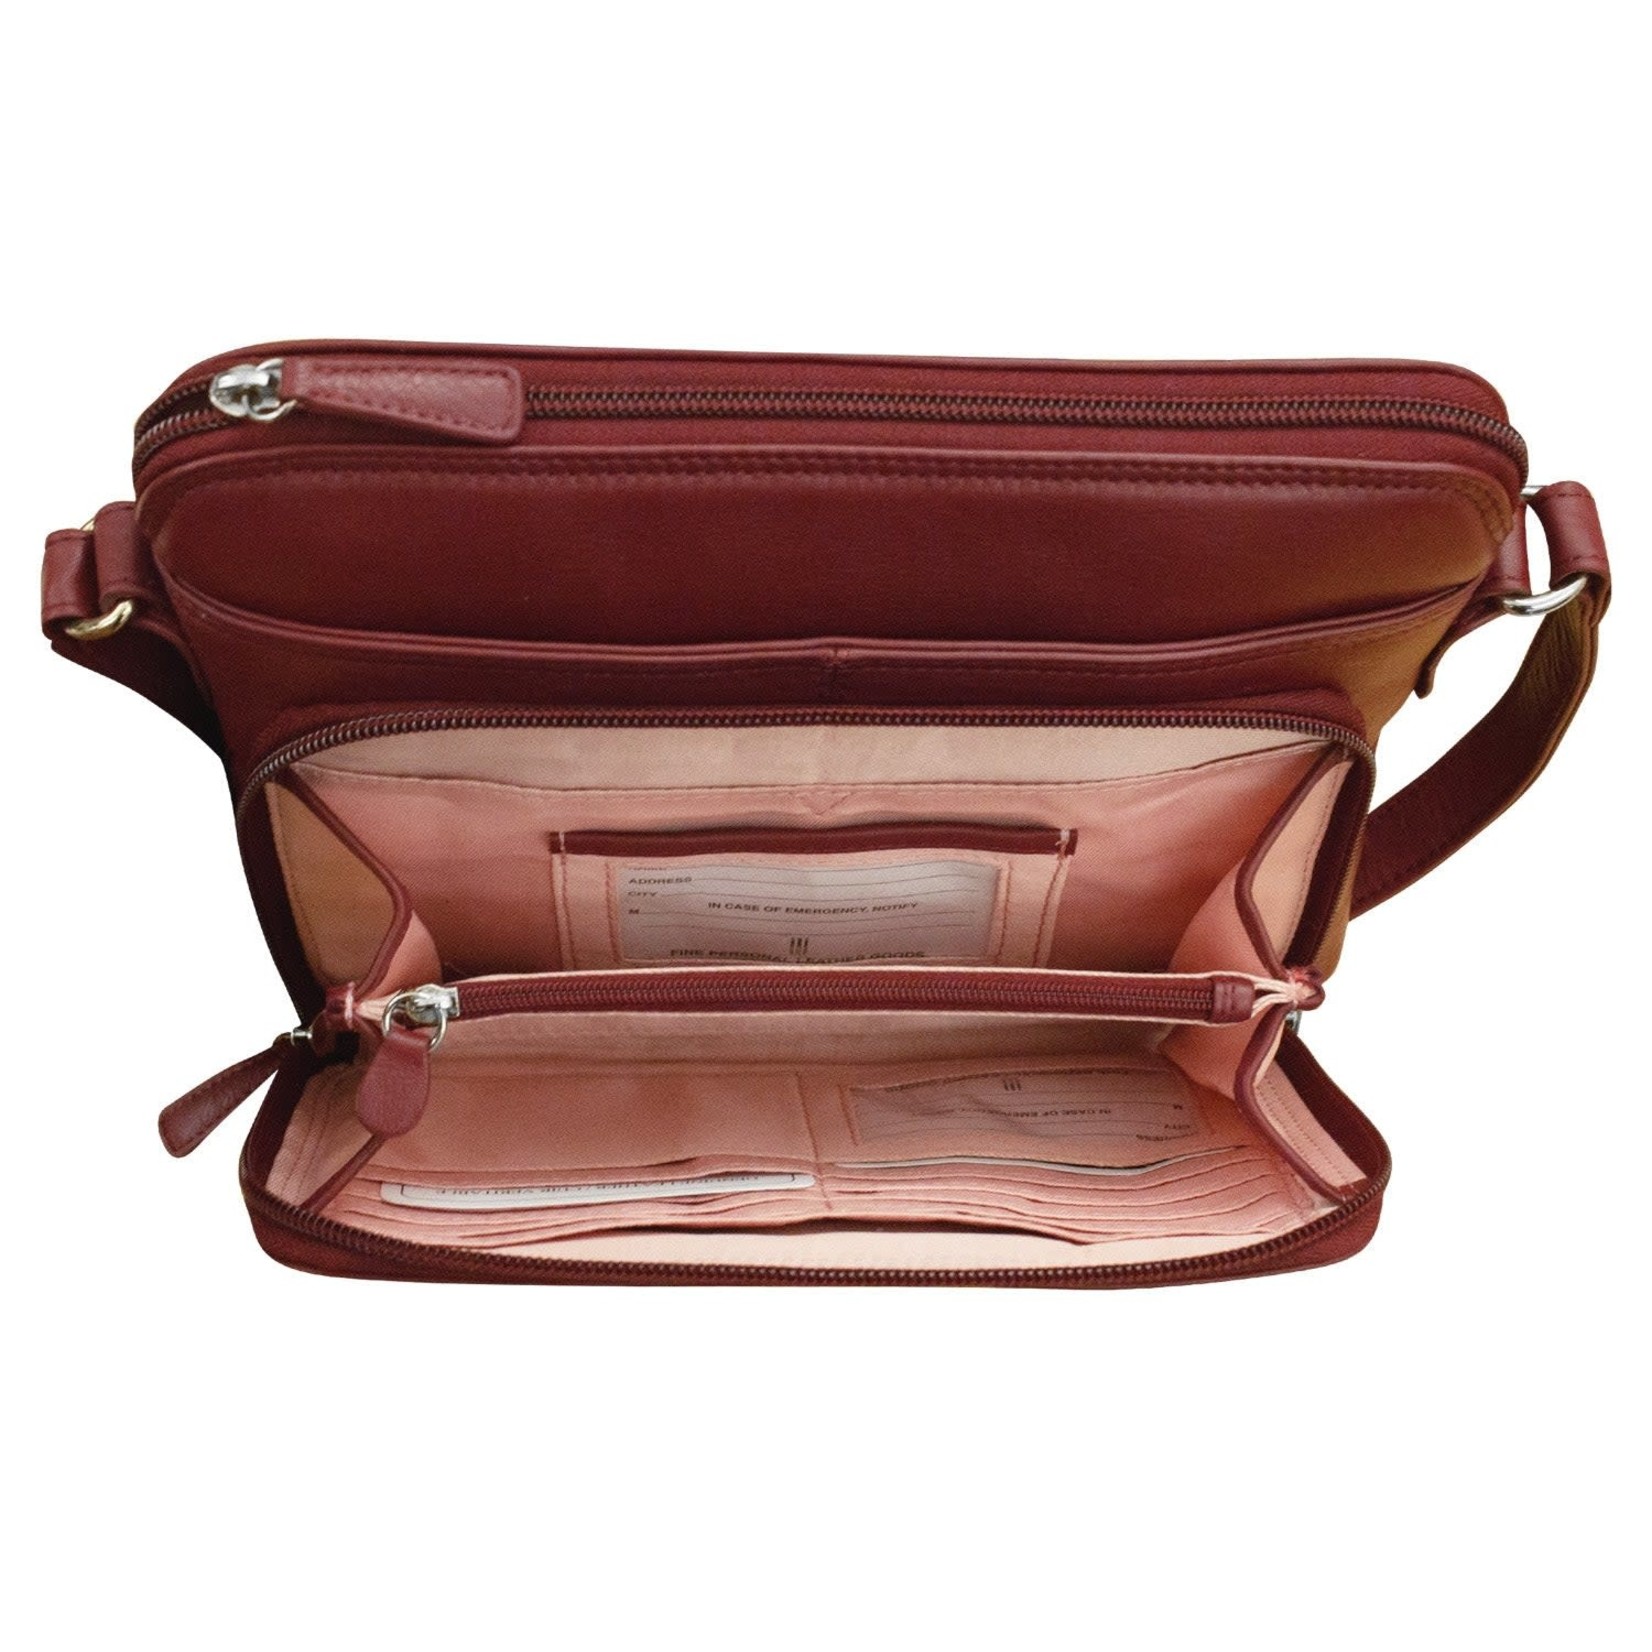 Leather Handbags and Accessories 6333 Merlot - Organizer Bag